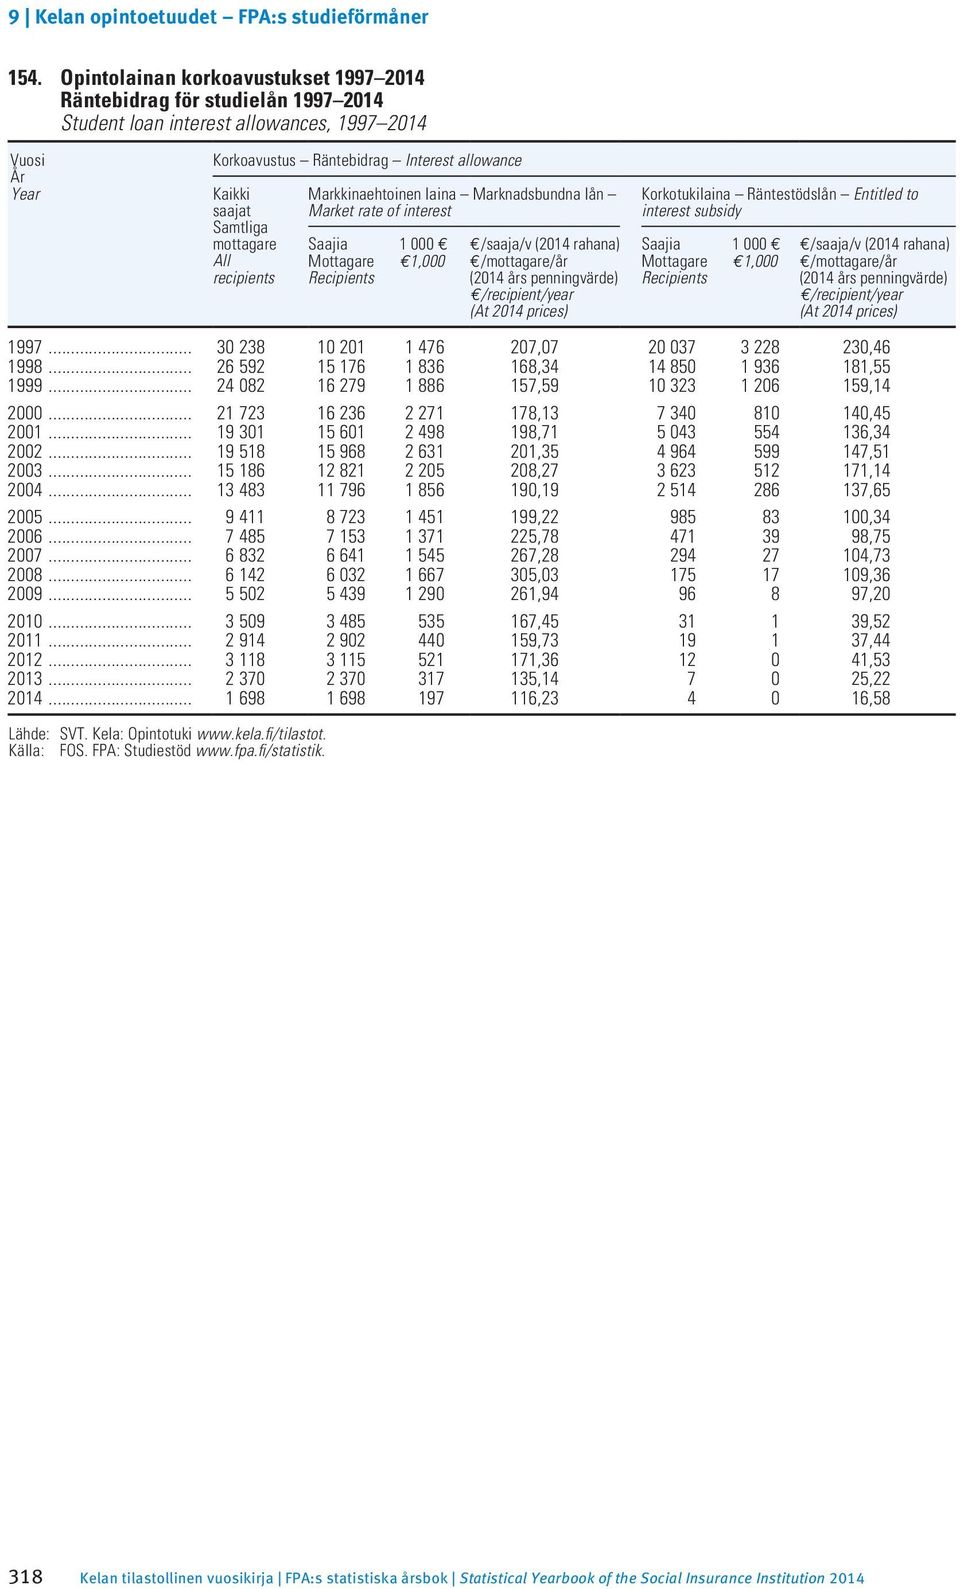 penningvärde) e/recipient/year (At 2014 prices) Korkotukilaina Räntestödslån Entitled to interest subsidy Saajia Mottagare Recipients 1 000 e e1,000 e/saaja/v (2014 rahana) e/mottagare/år (2014 års